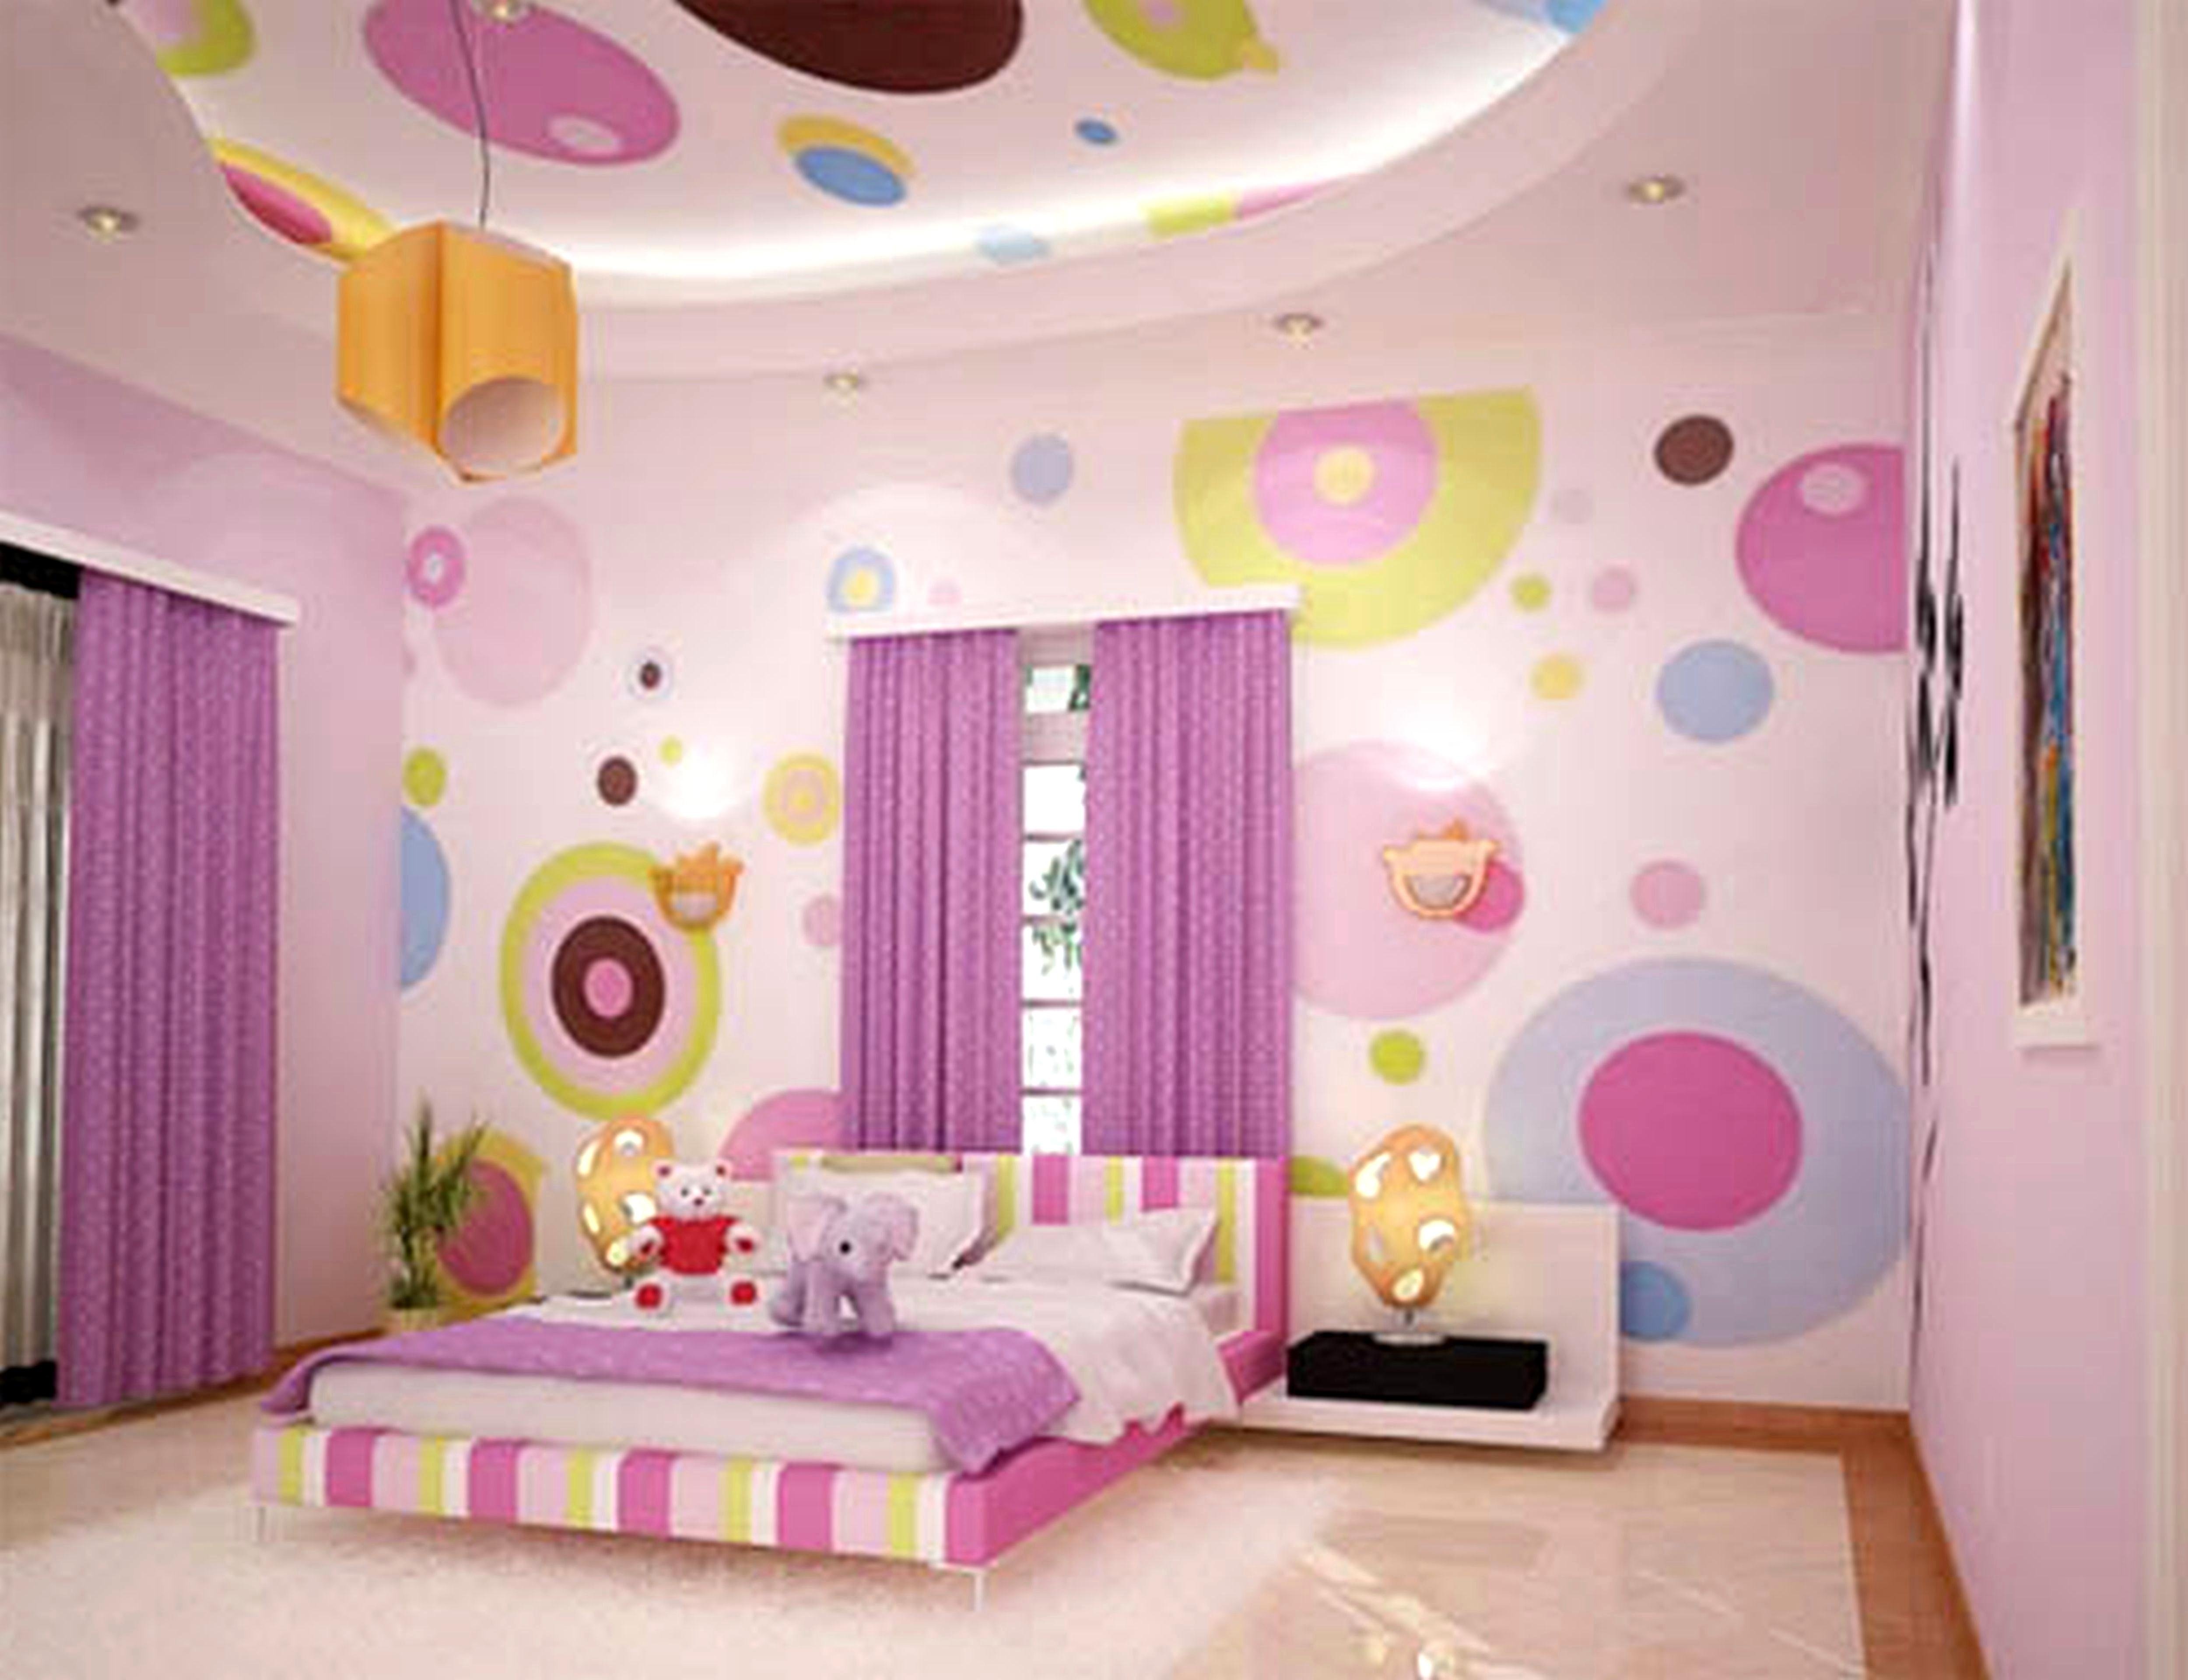 10 Lovable Paint Ideas For Girls Bedroom phenomenal kid bedroom paint ideas oom paint colors unique bedroom 2022